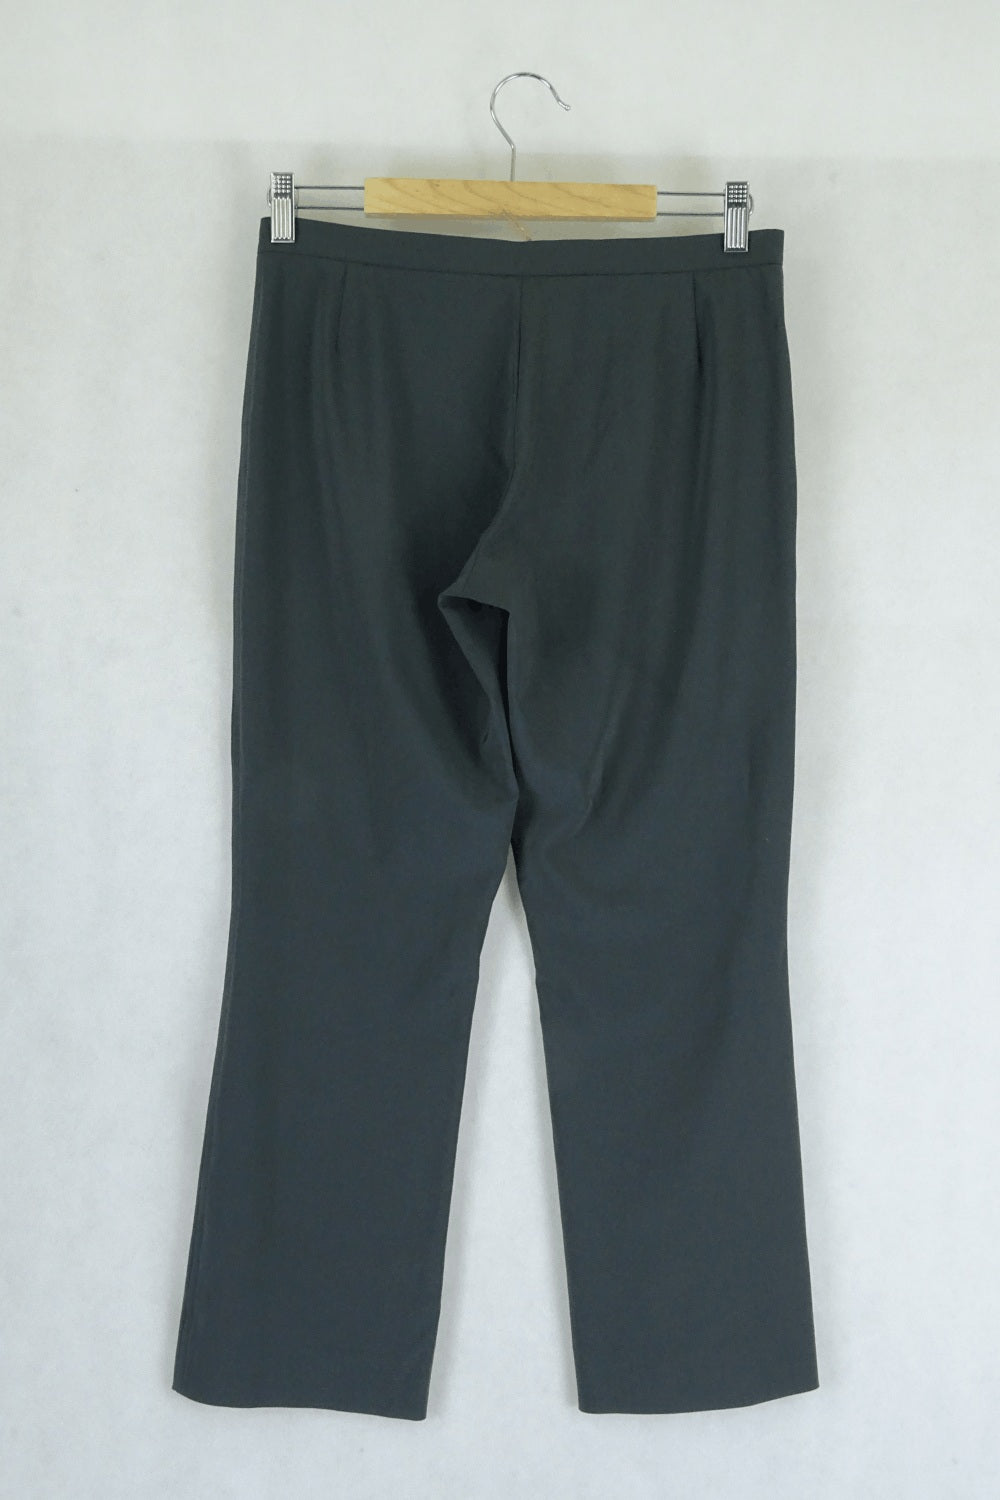 Scanlan Theodore Grey Pants 10